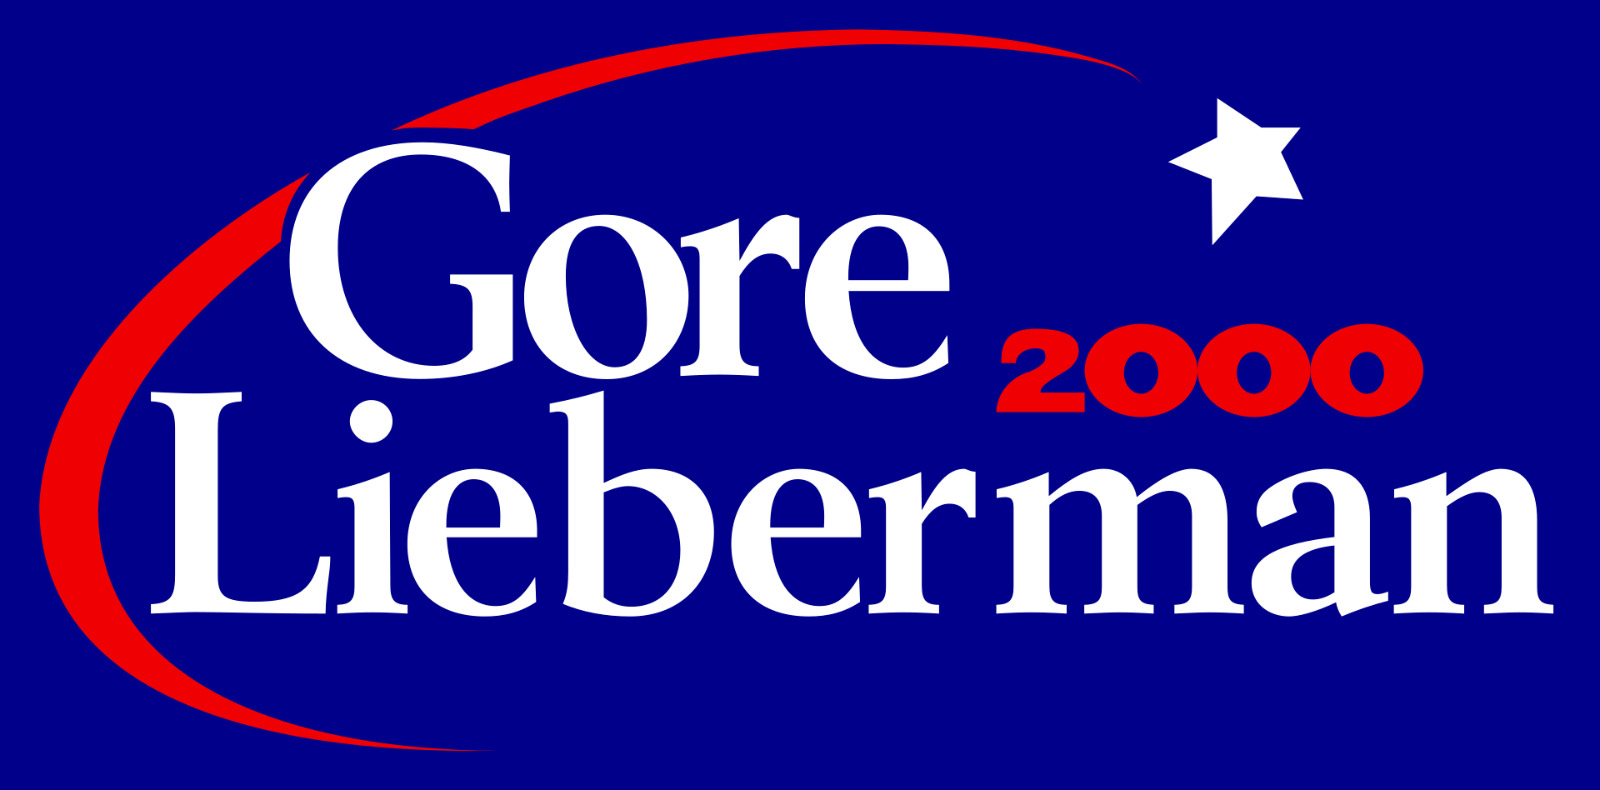 Al Gore Joe Lieberman Replica 2000 President Campaign Bumper Sticker